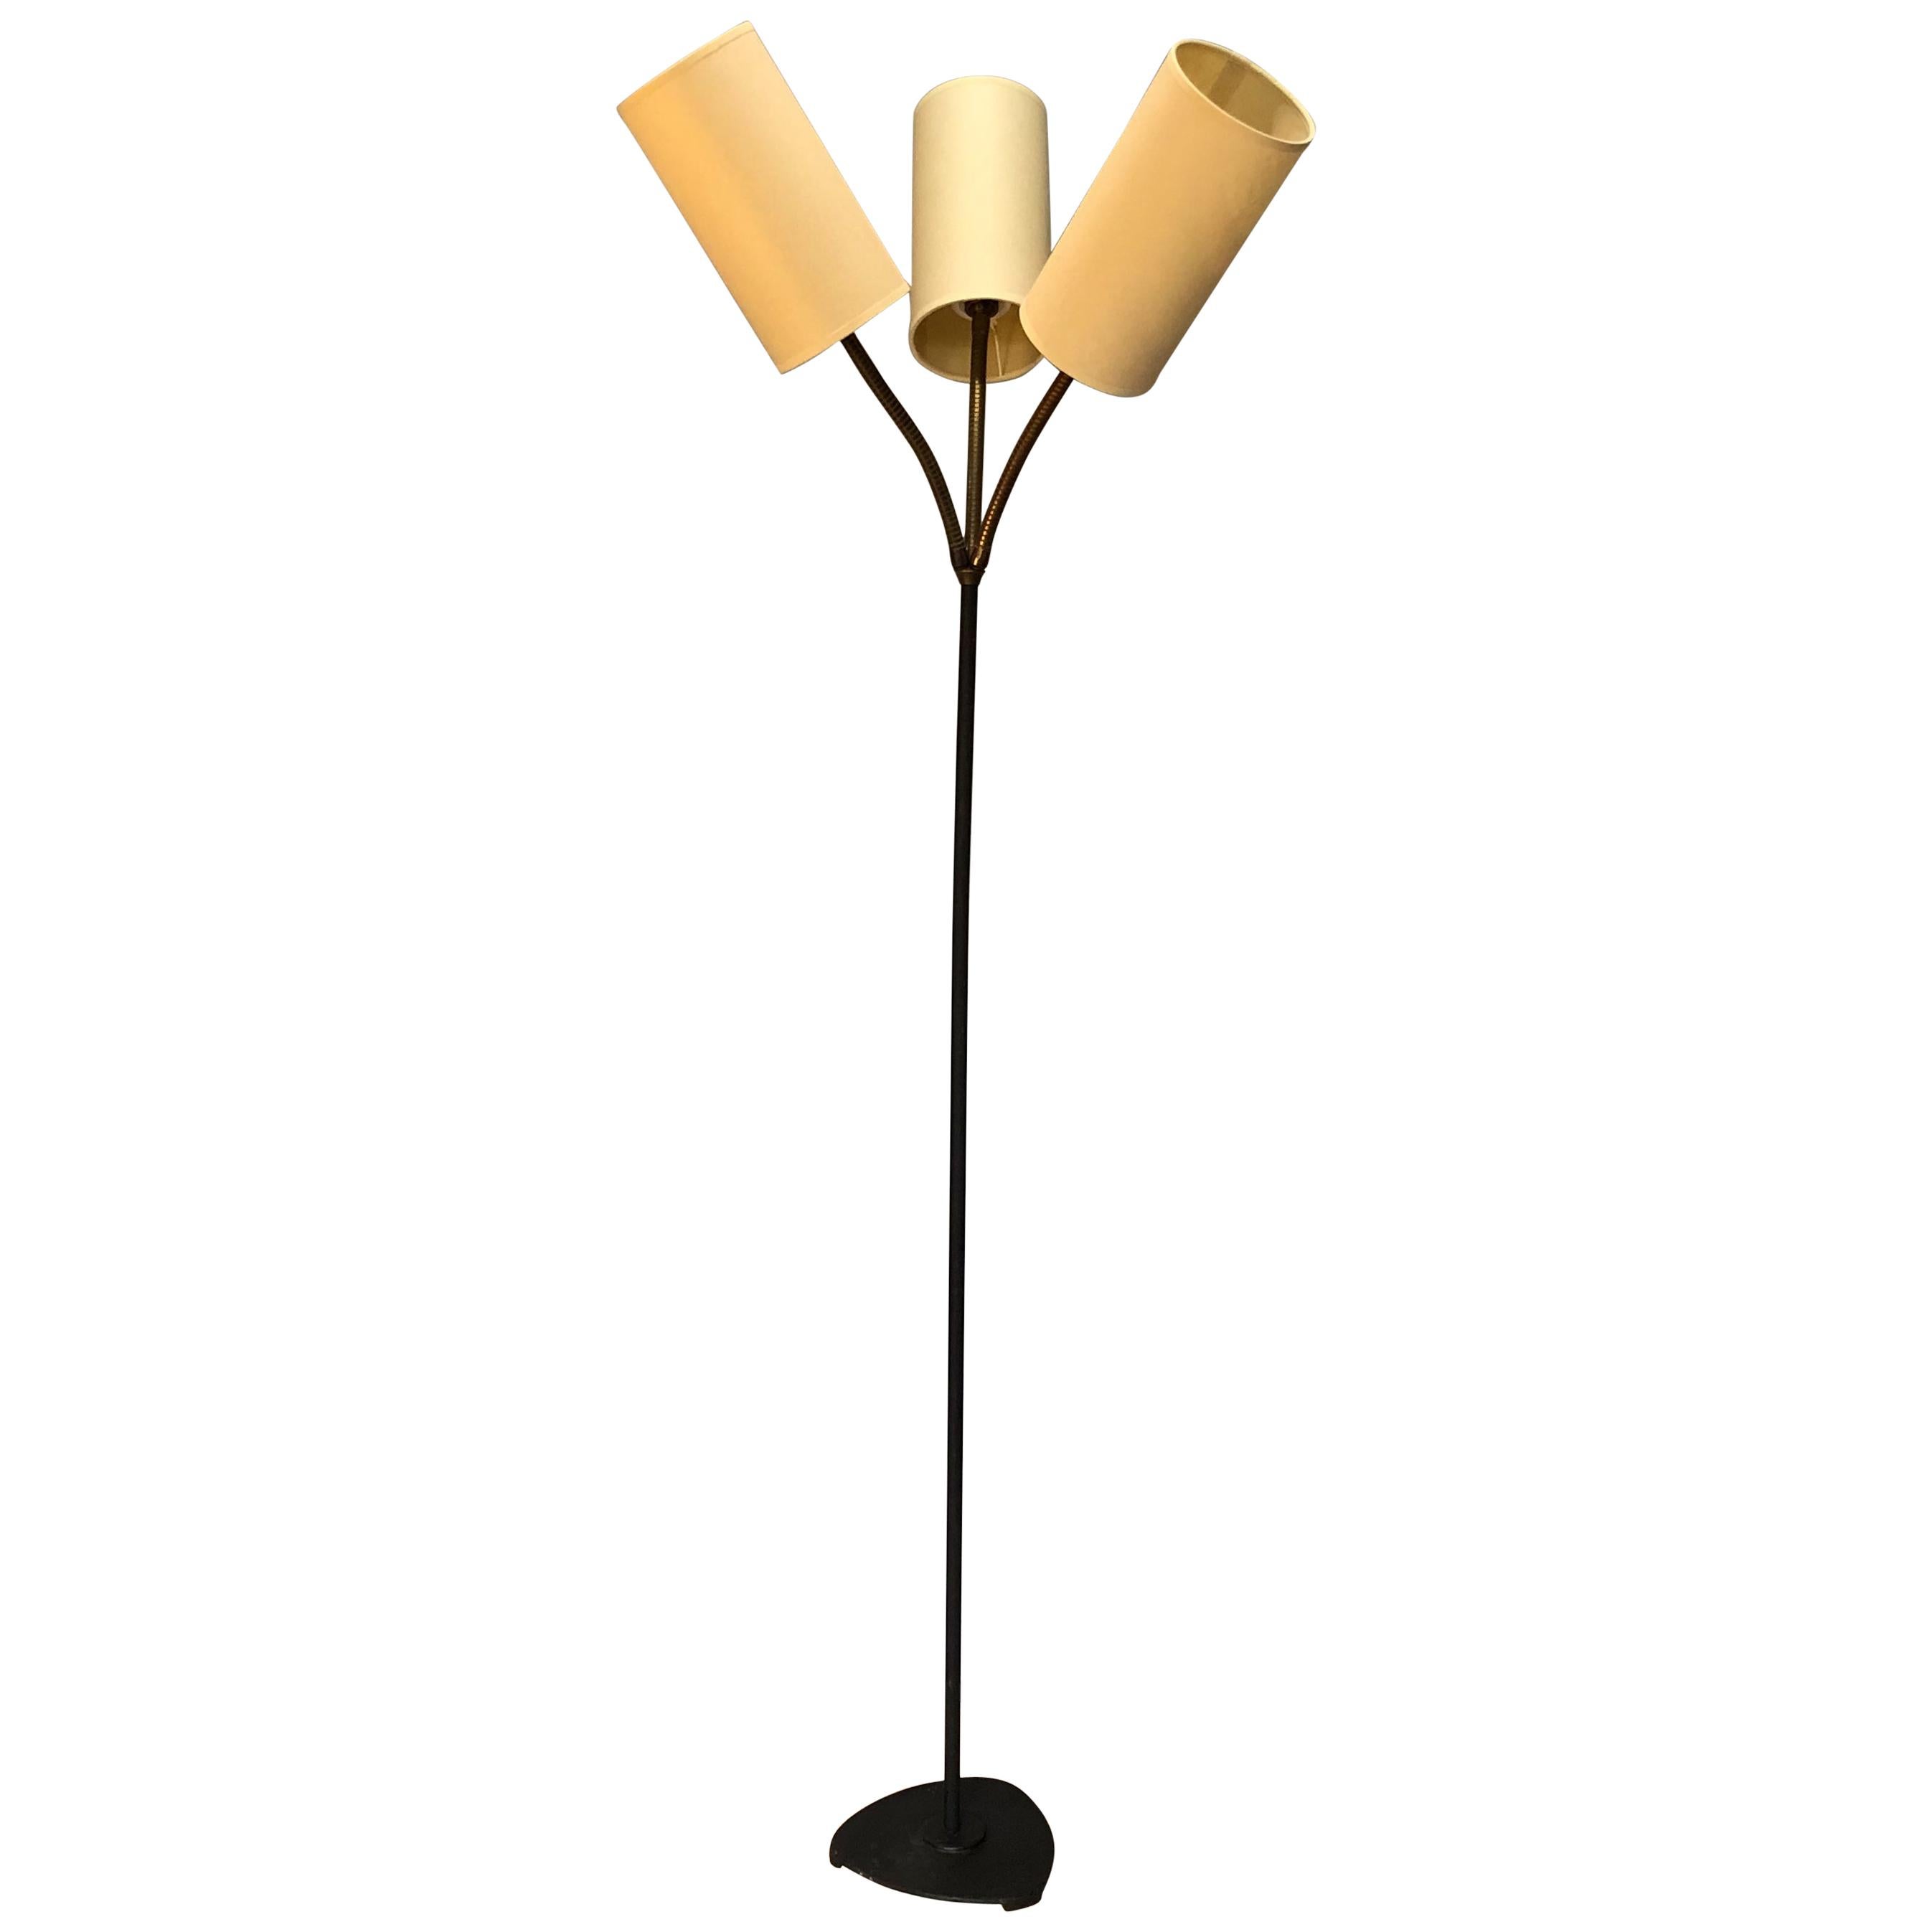 Danish Midcentury Floor Lamp